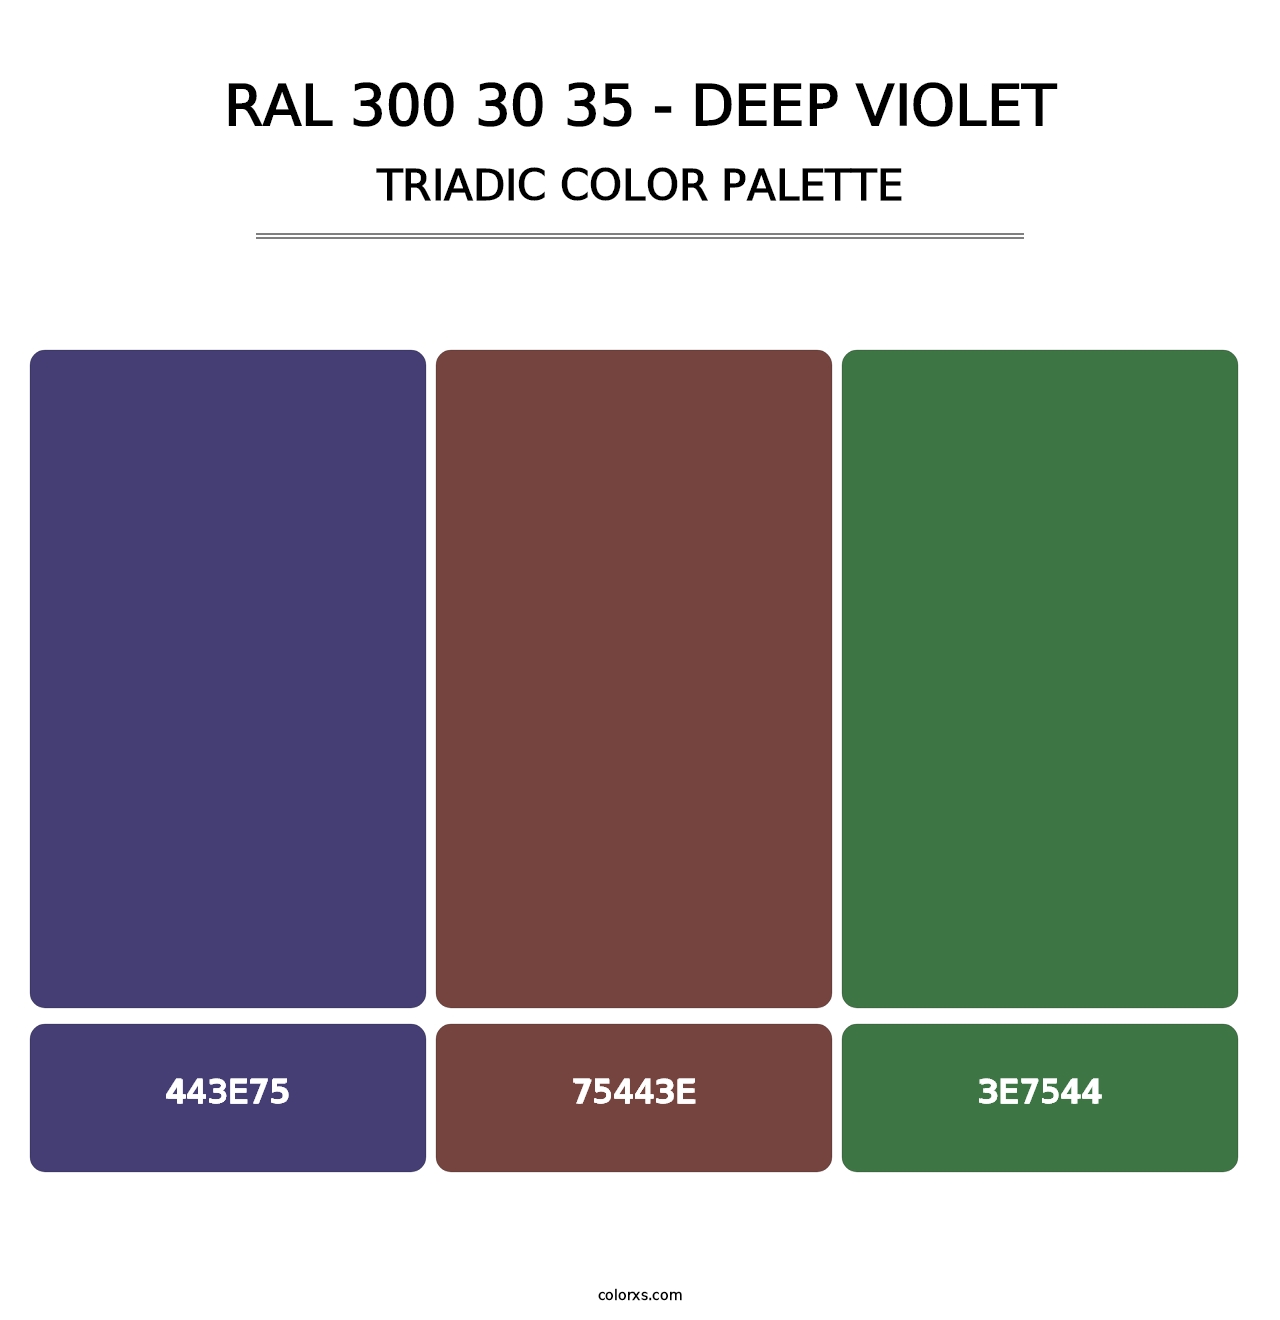 RAL 300 30 35 - Deep Violet - Triadic Color Palette